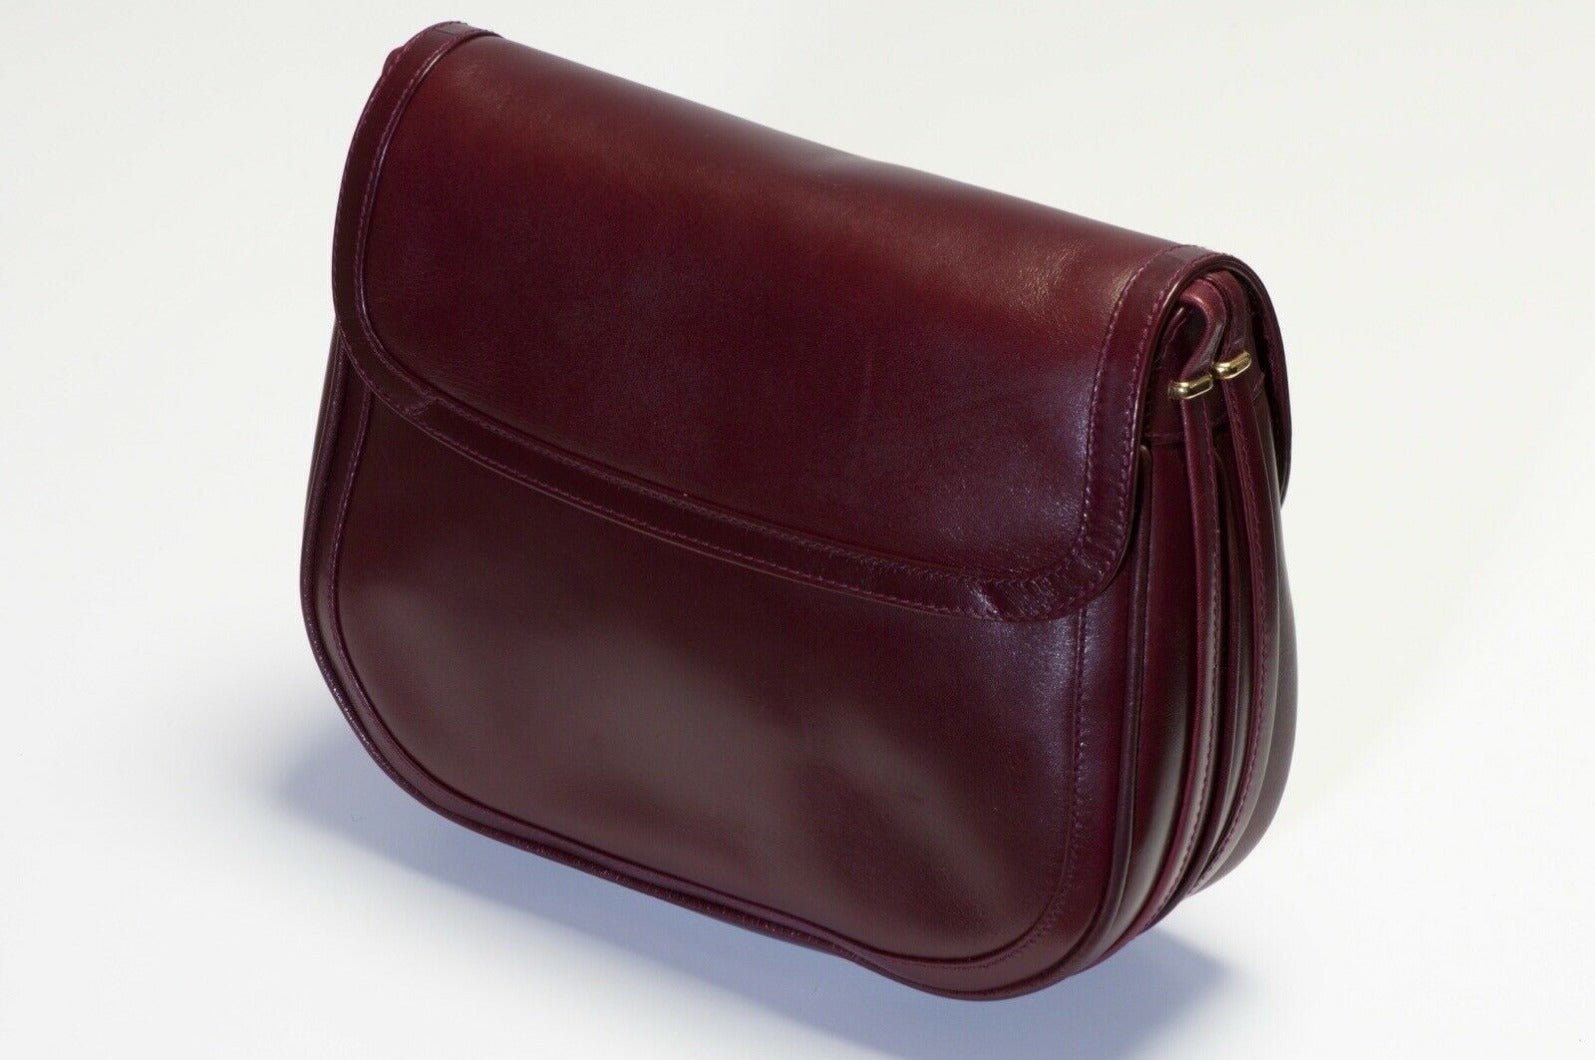 Vintage GUCCI Burgundy Leather Saddle Women’s Crossbody Bag